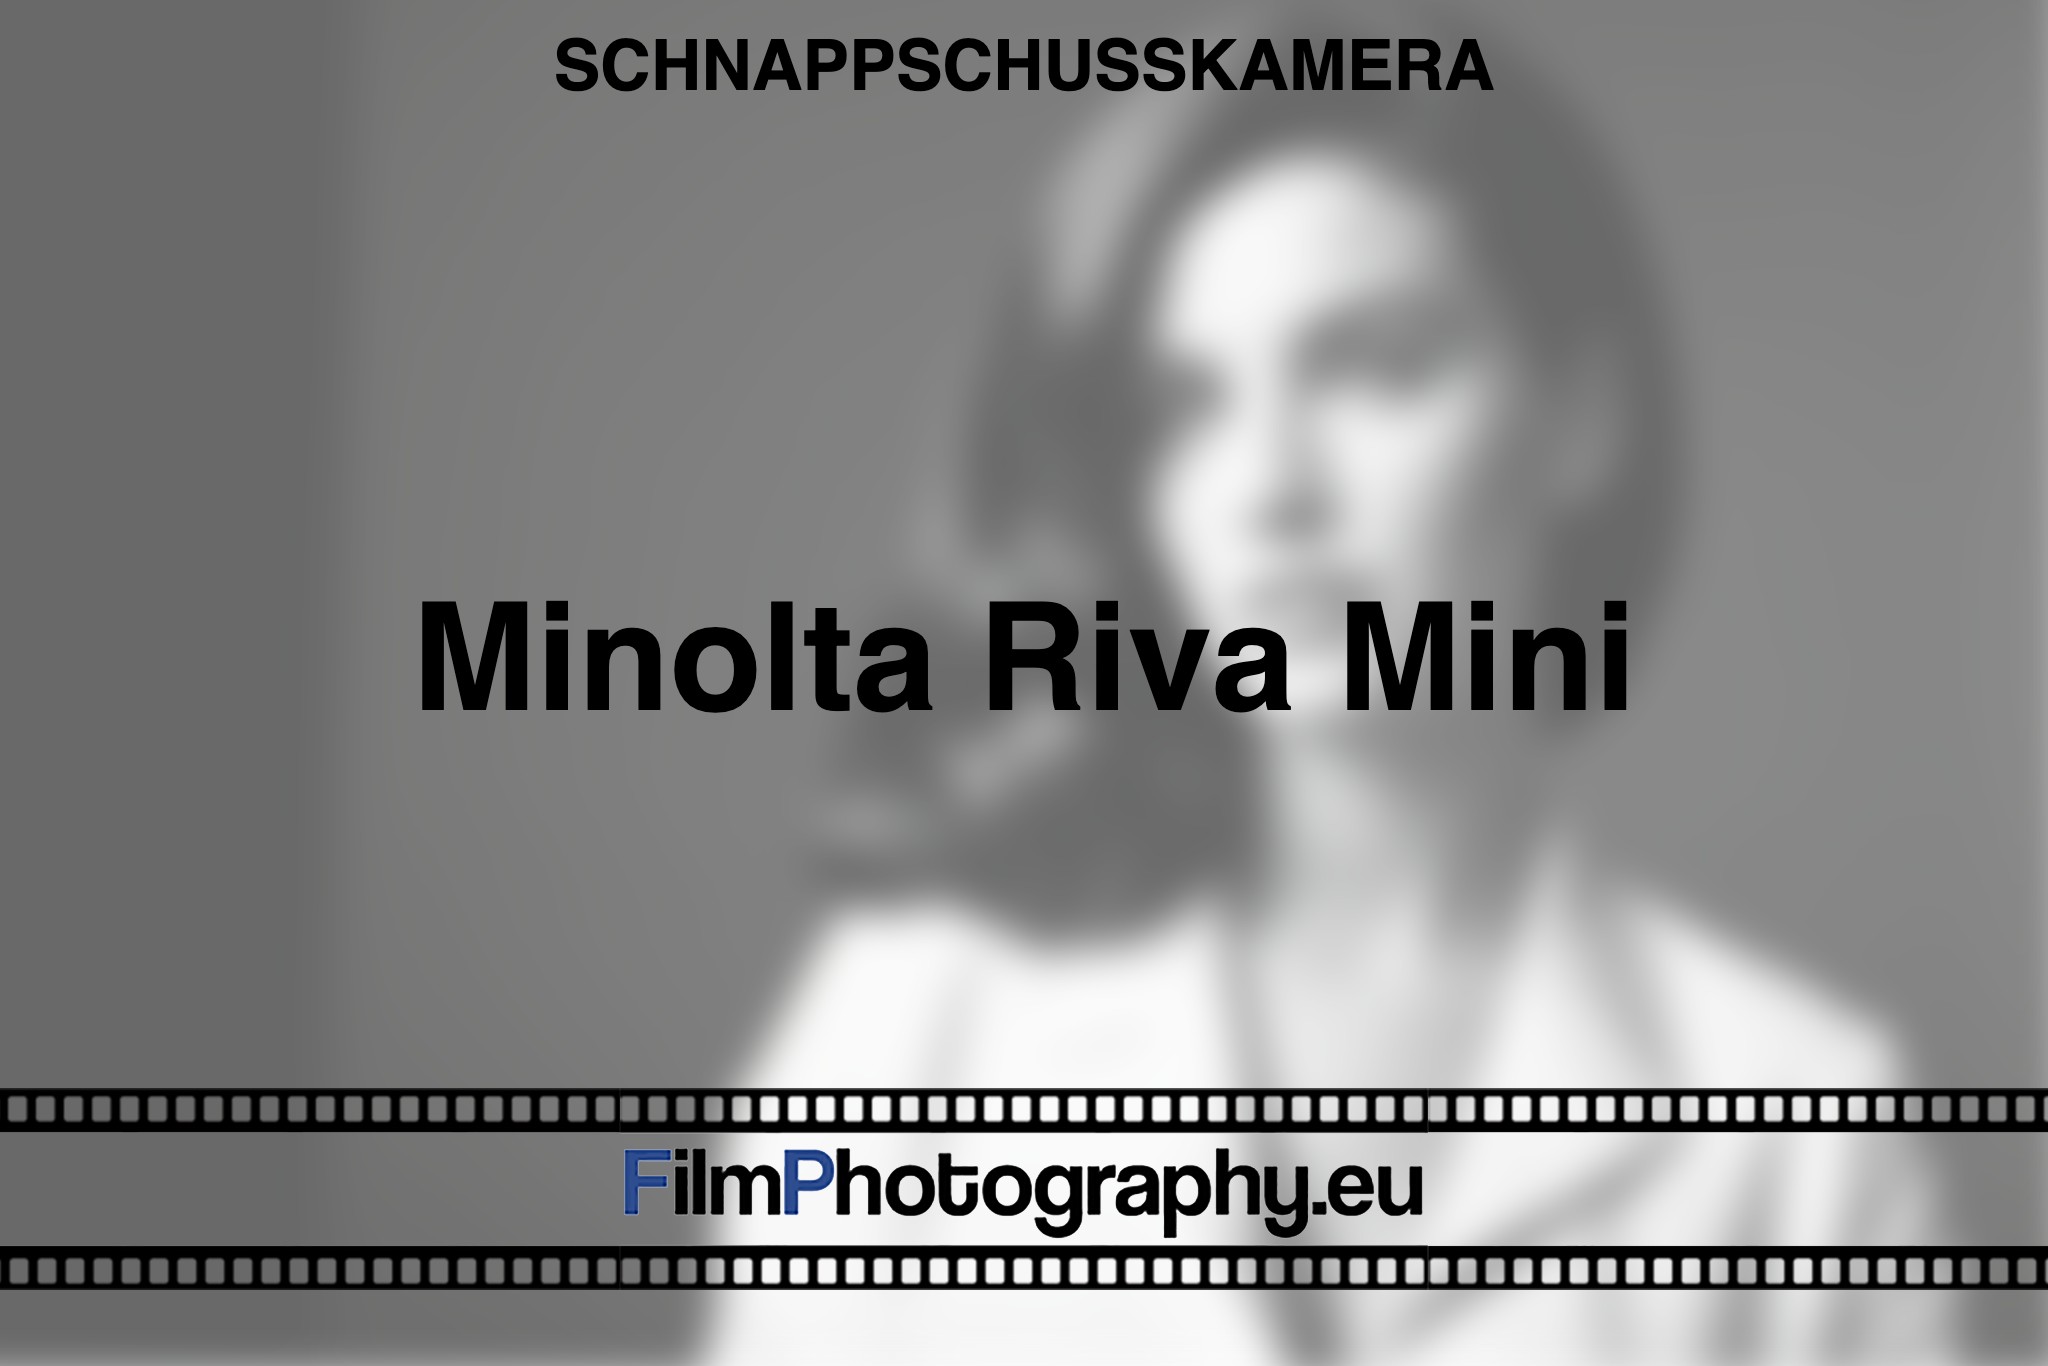 minolta-riva-mini-schnappschusskamera-bnv